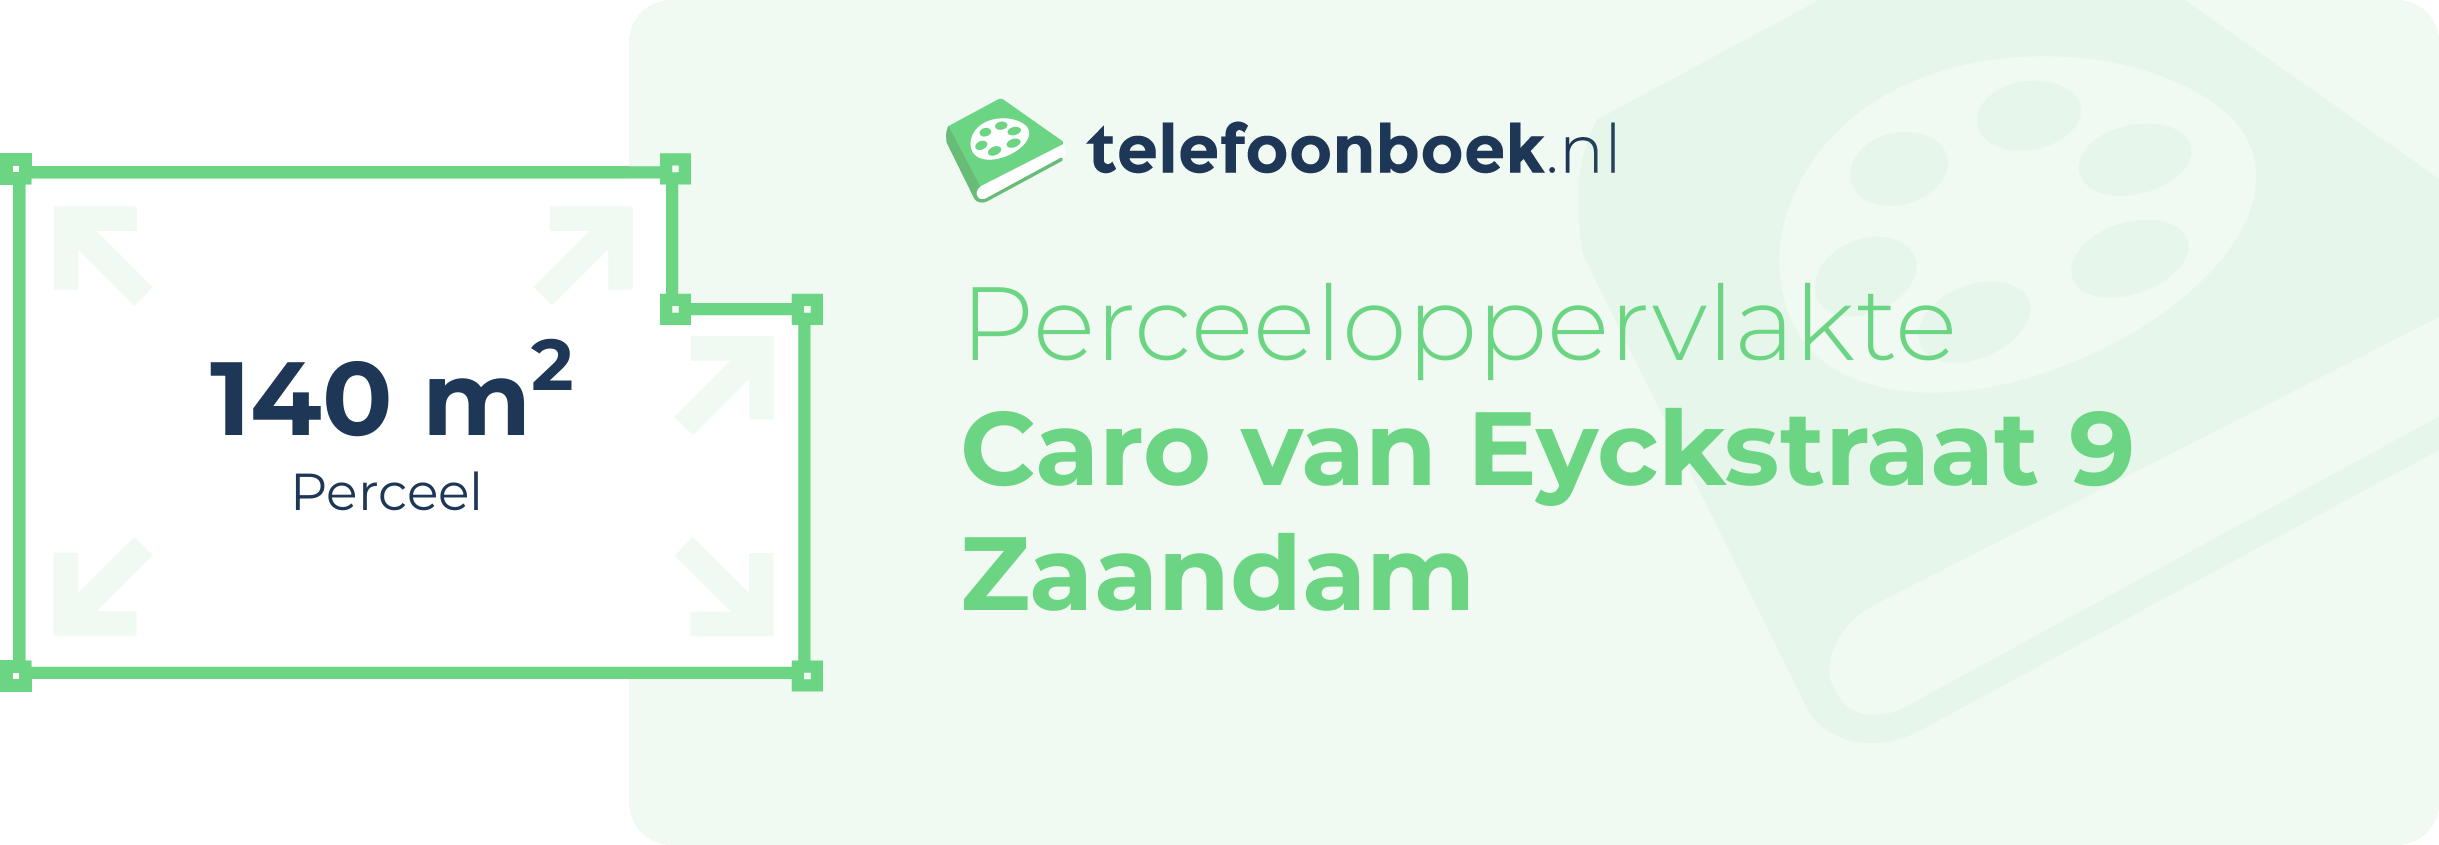 Perceeloppervlakte Caro Van Eyckstraat 9 Zaandam